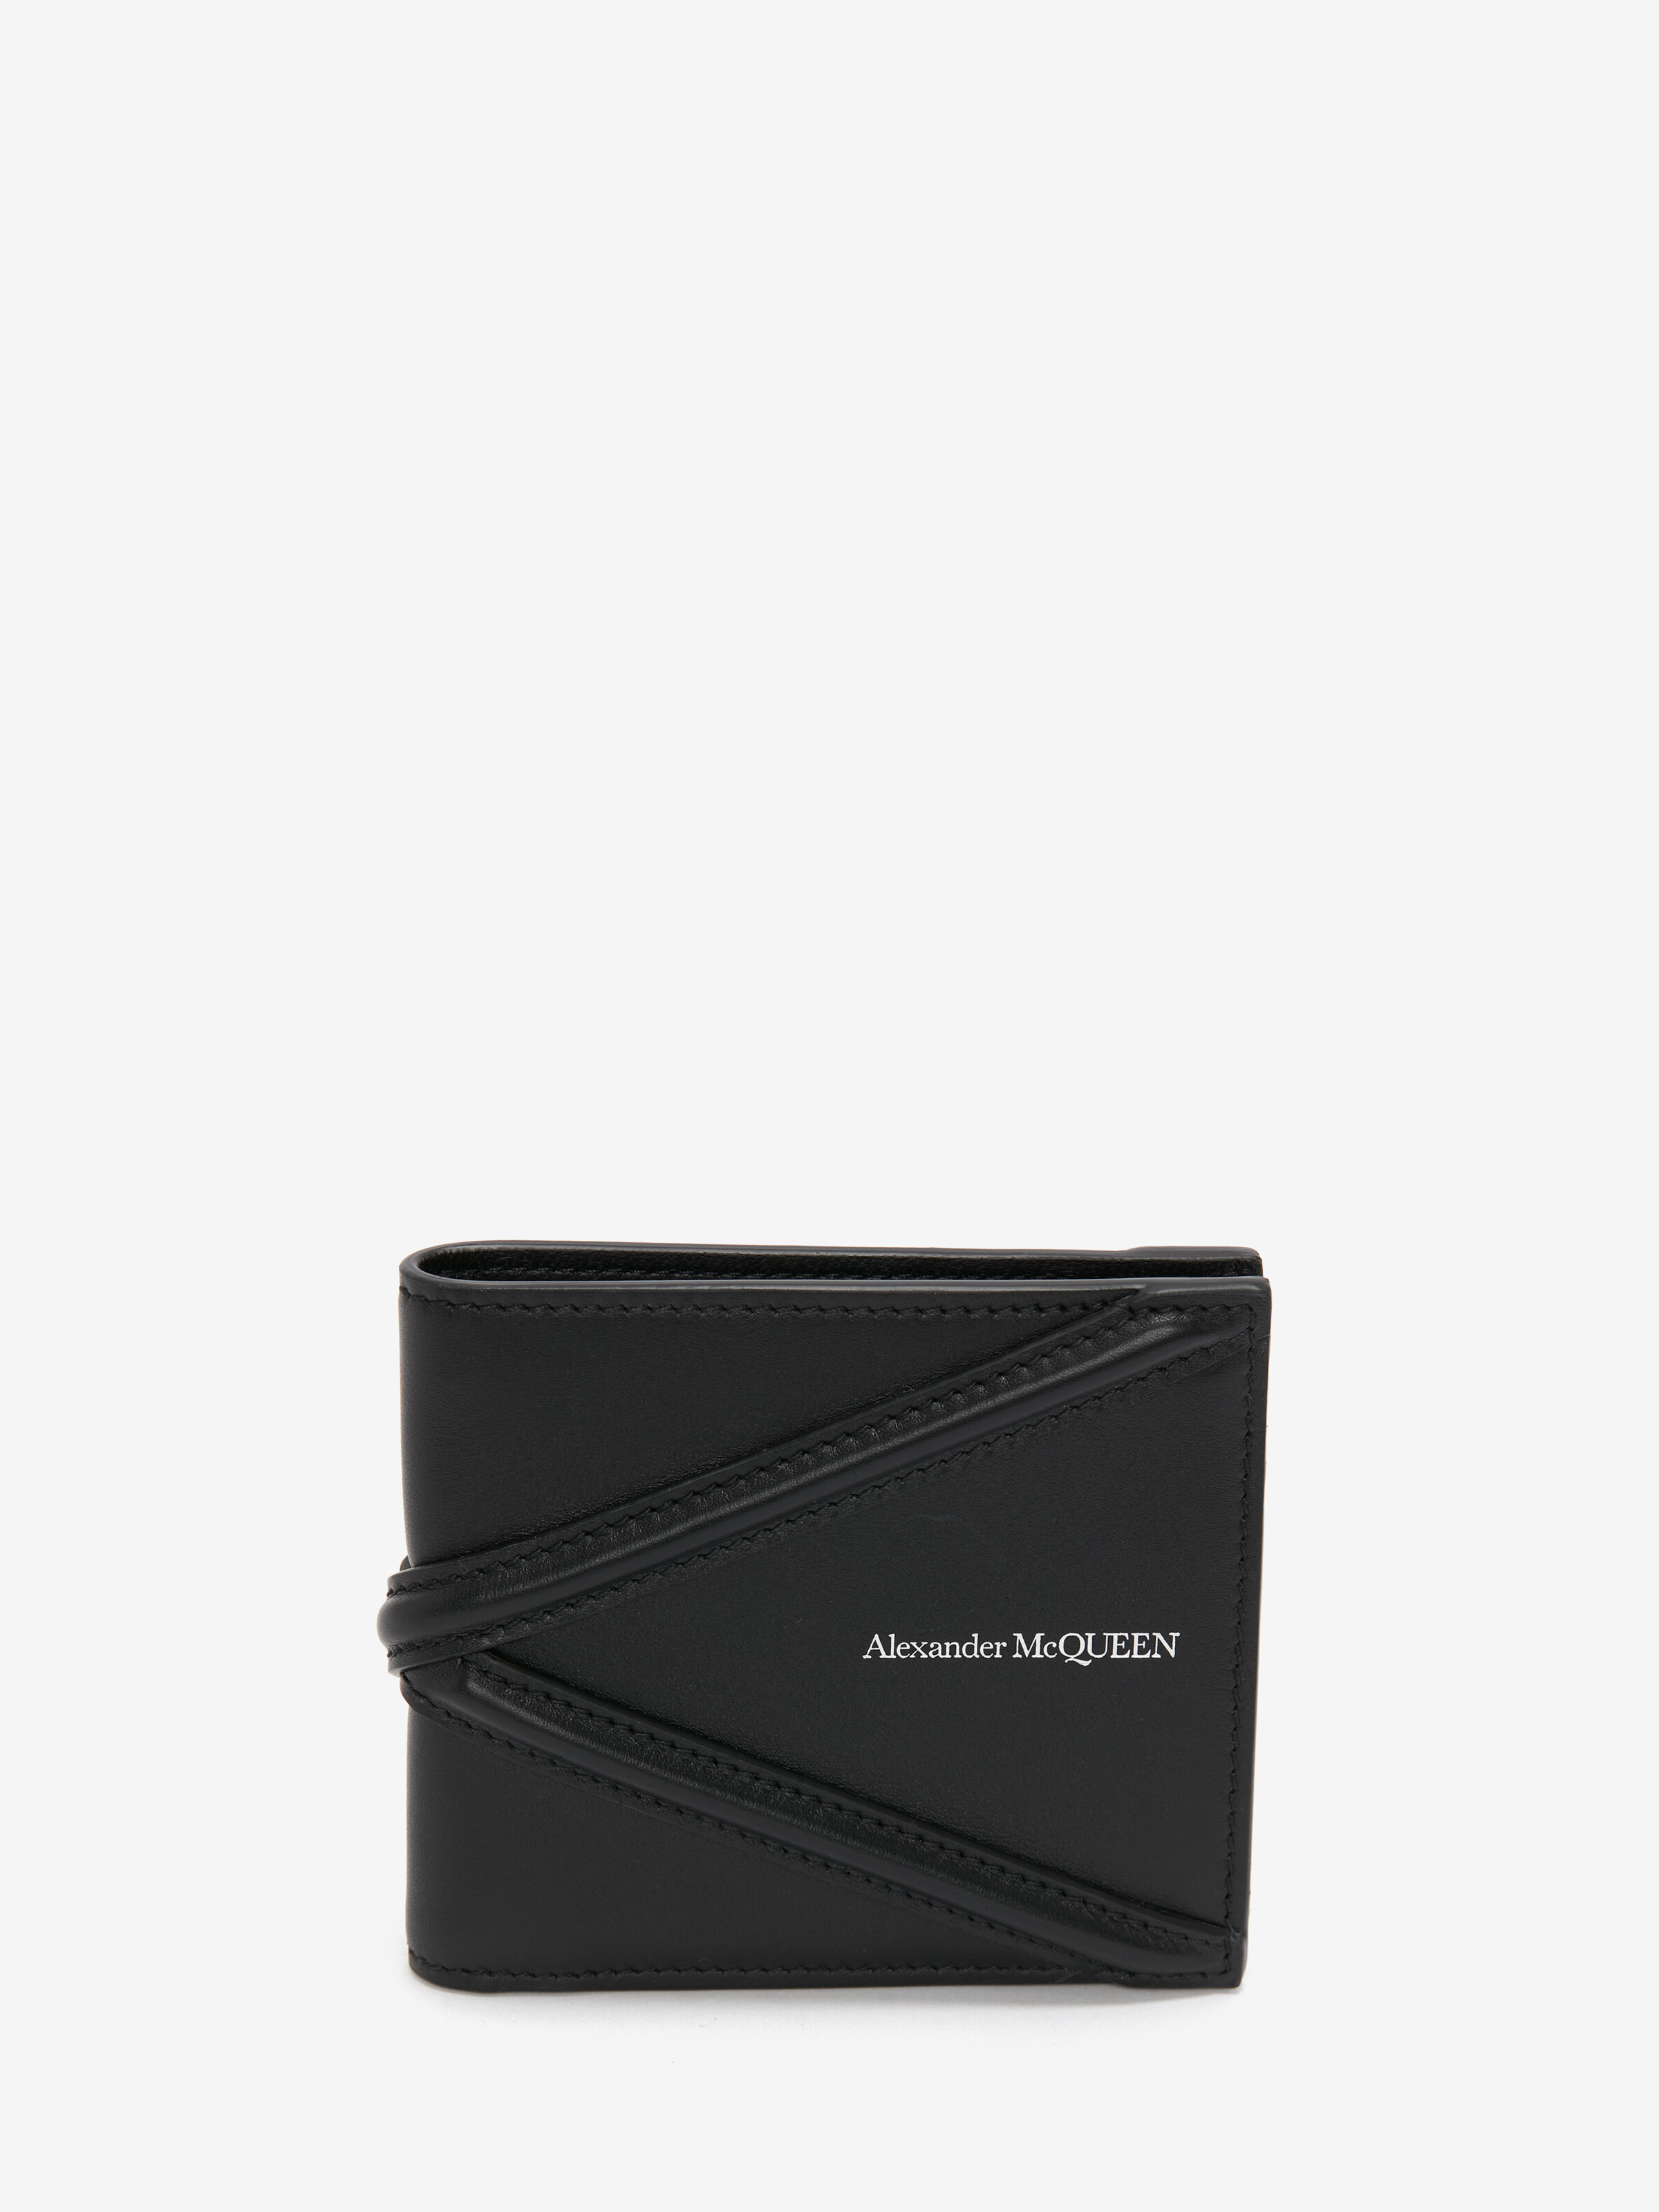 Alexander McQUEEN カーフレザー(牛革) 二つ折り財布 ブラックファッション小物